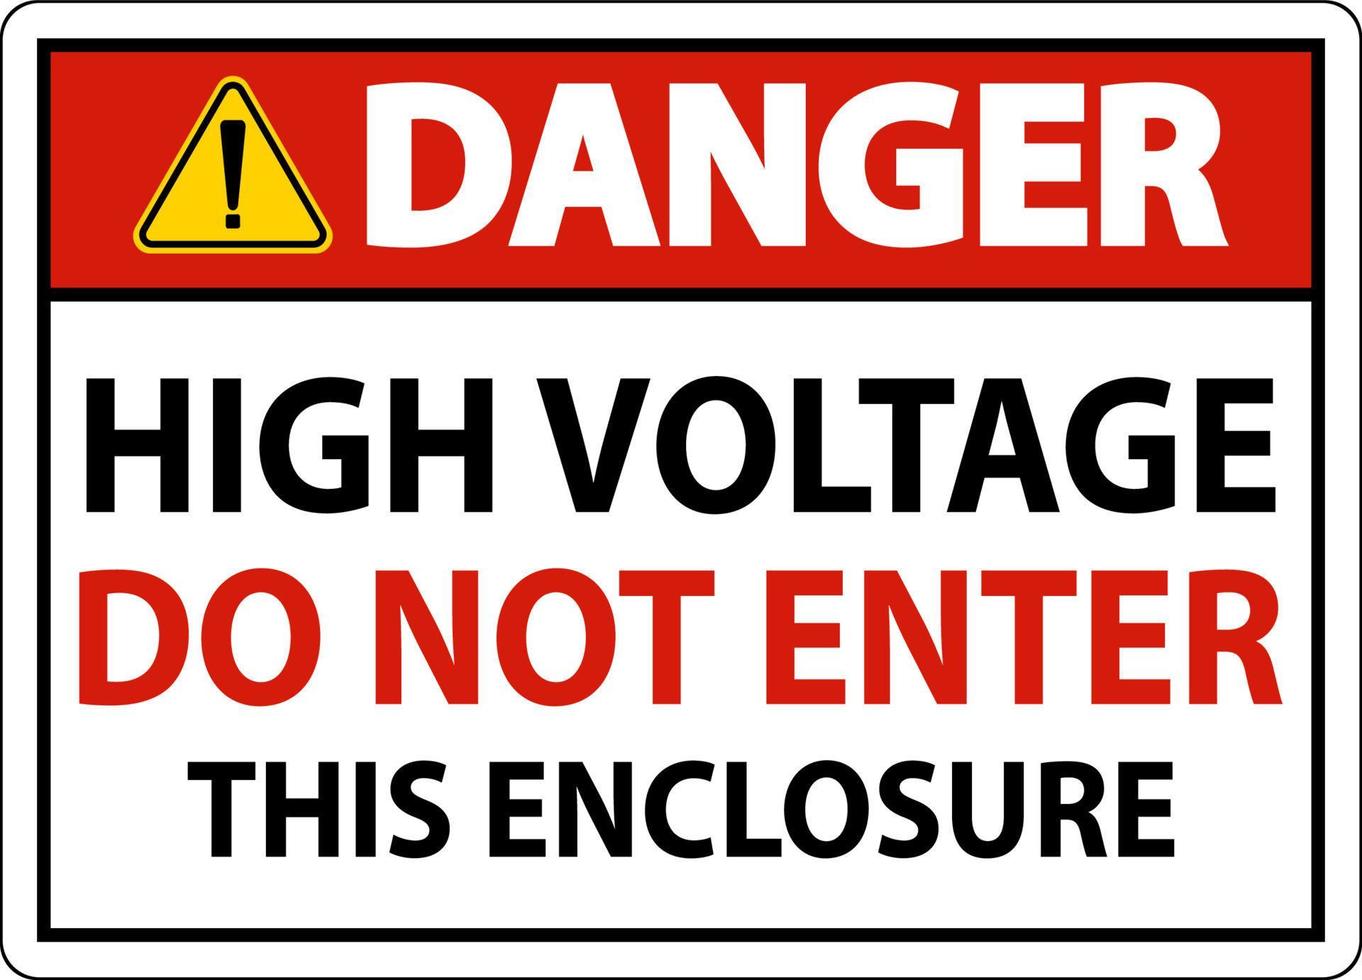 Danger High Voltage Do Not Enter Enclosure Sign vector